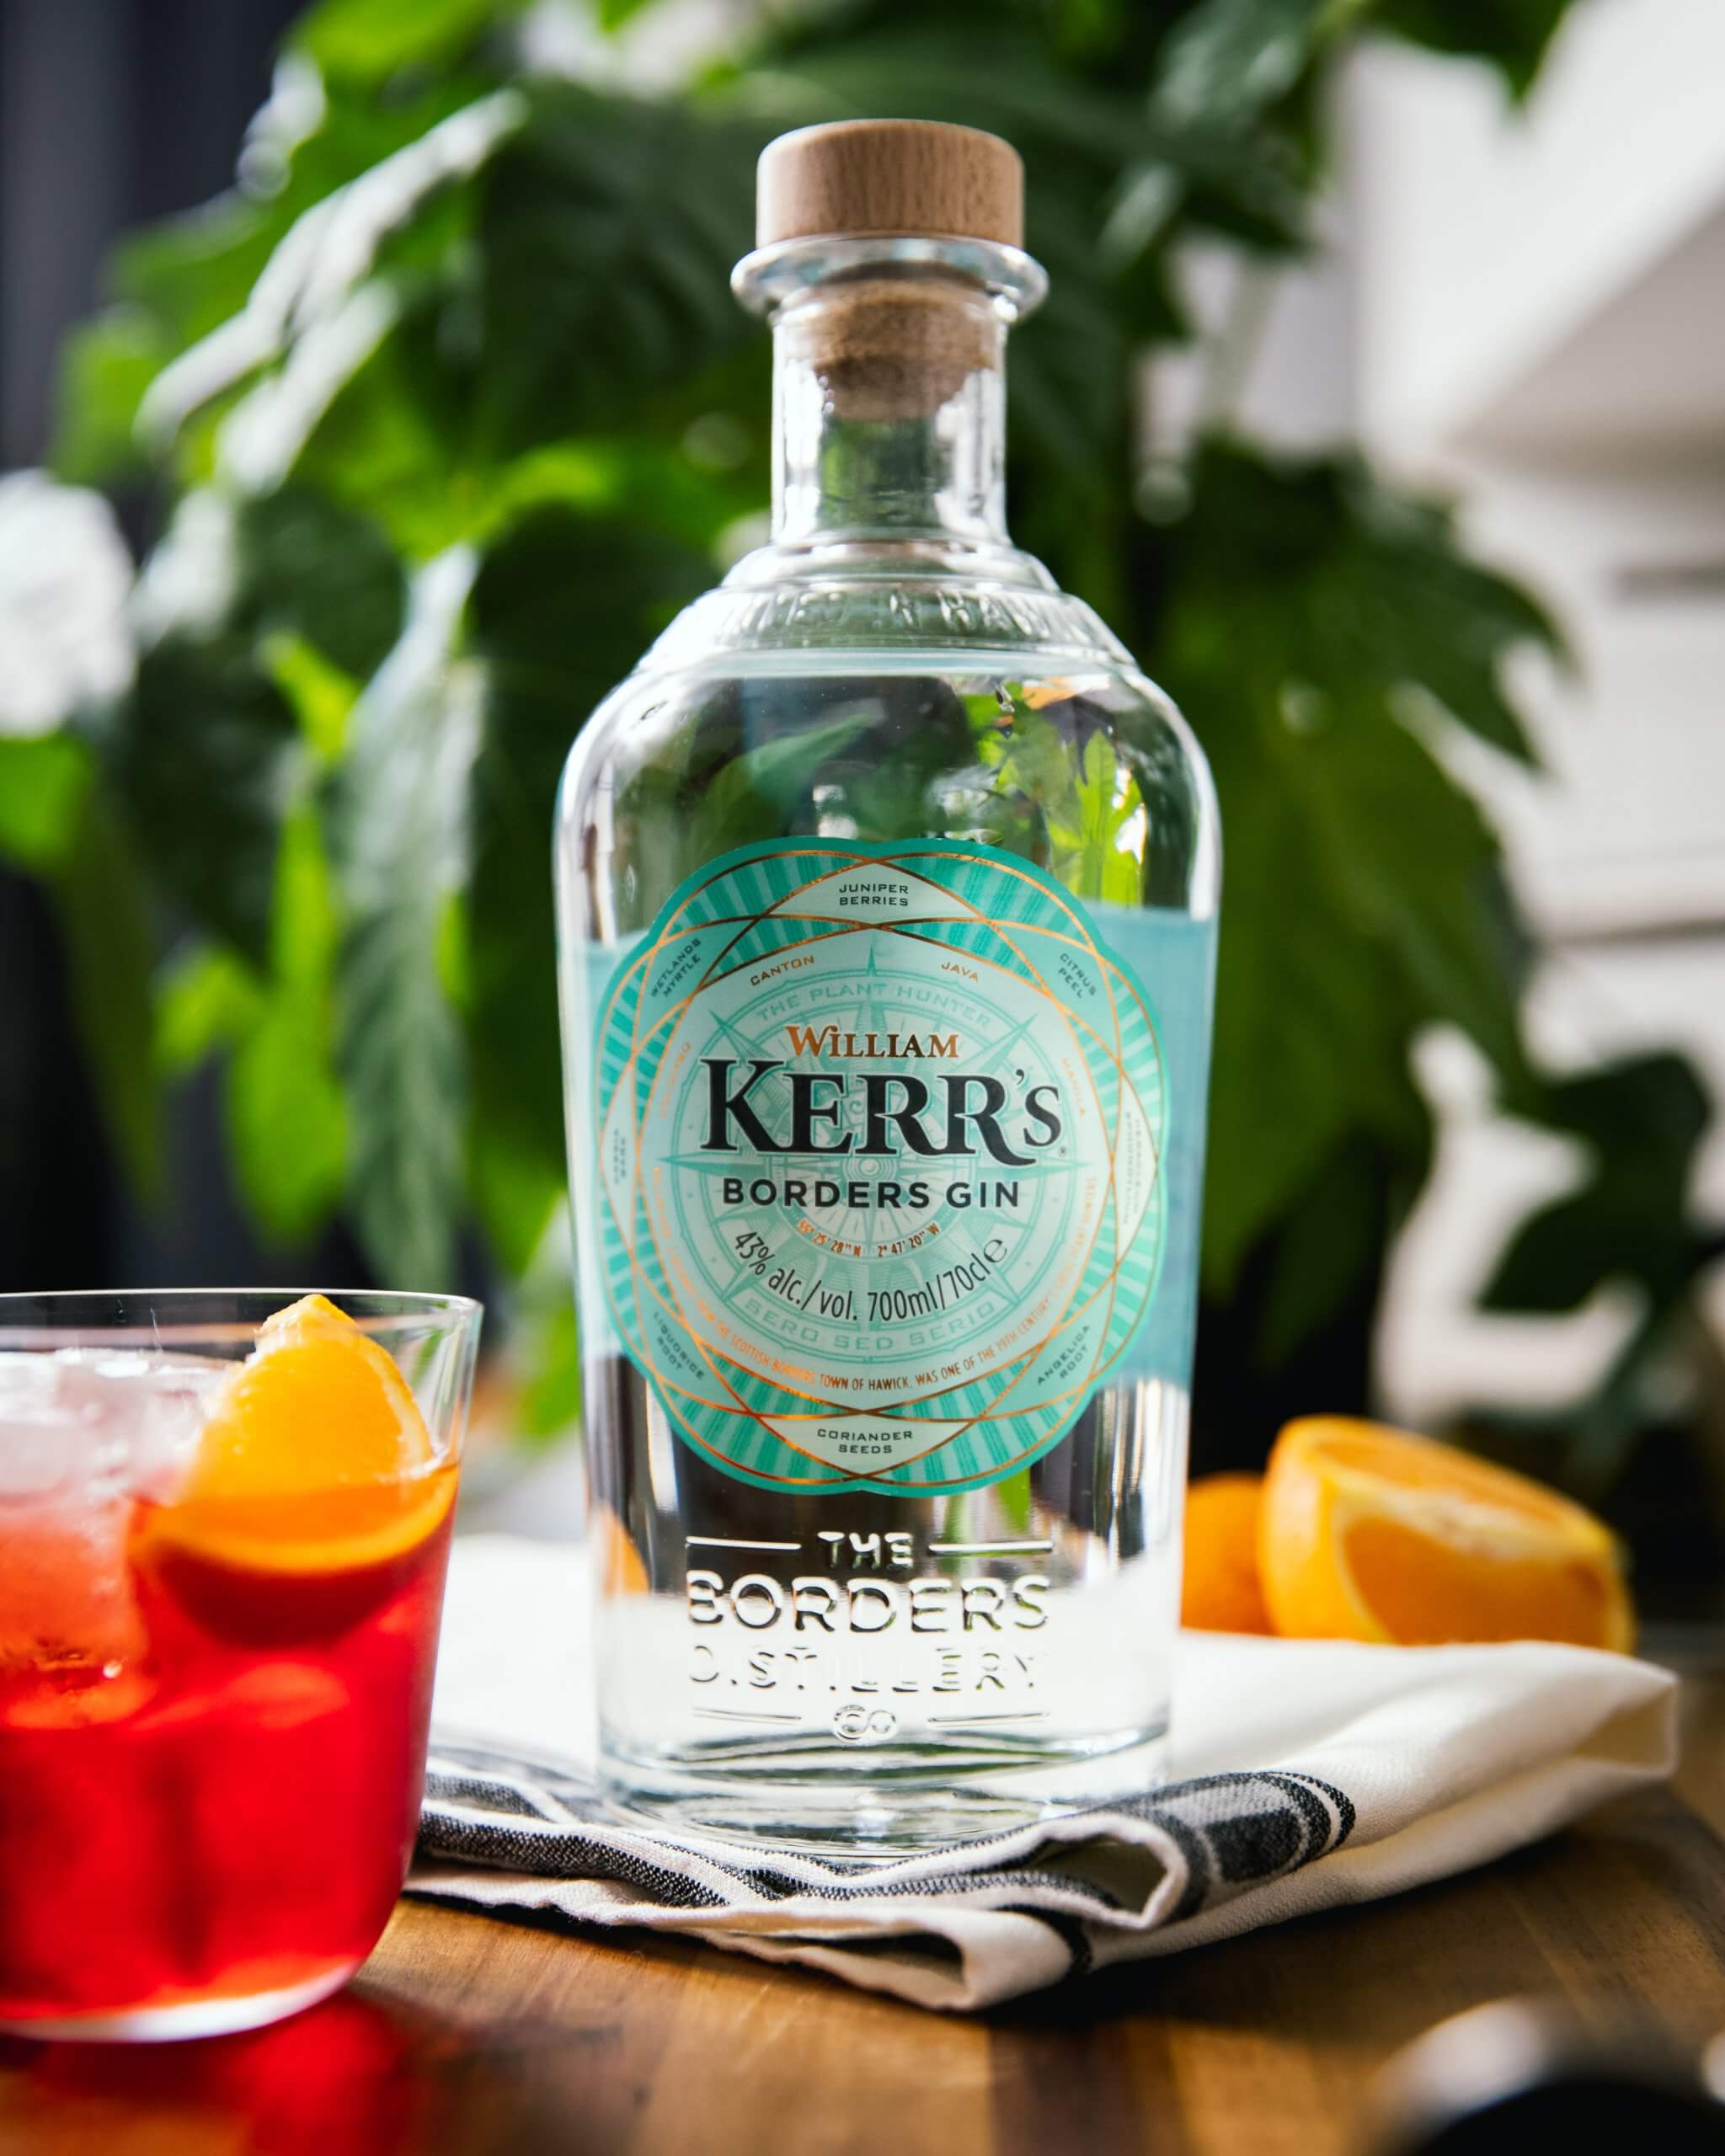 Serving Kerr’s Borders Gin